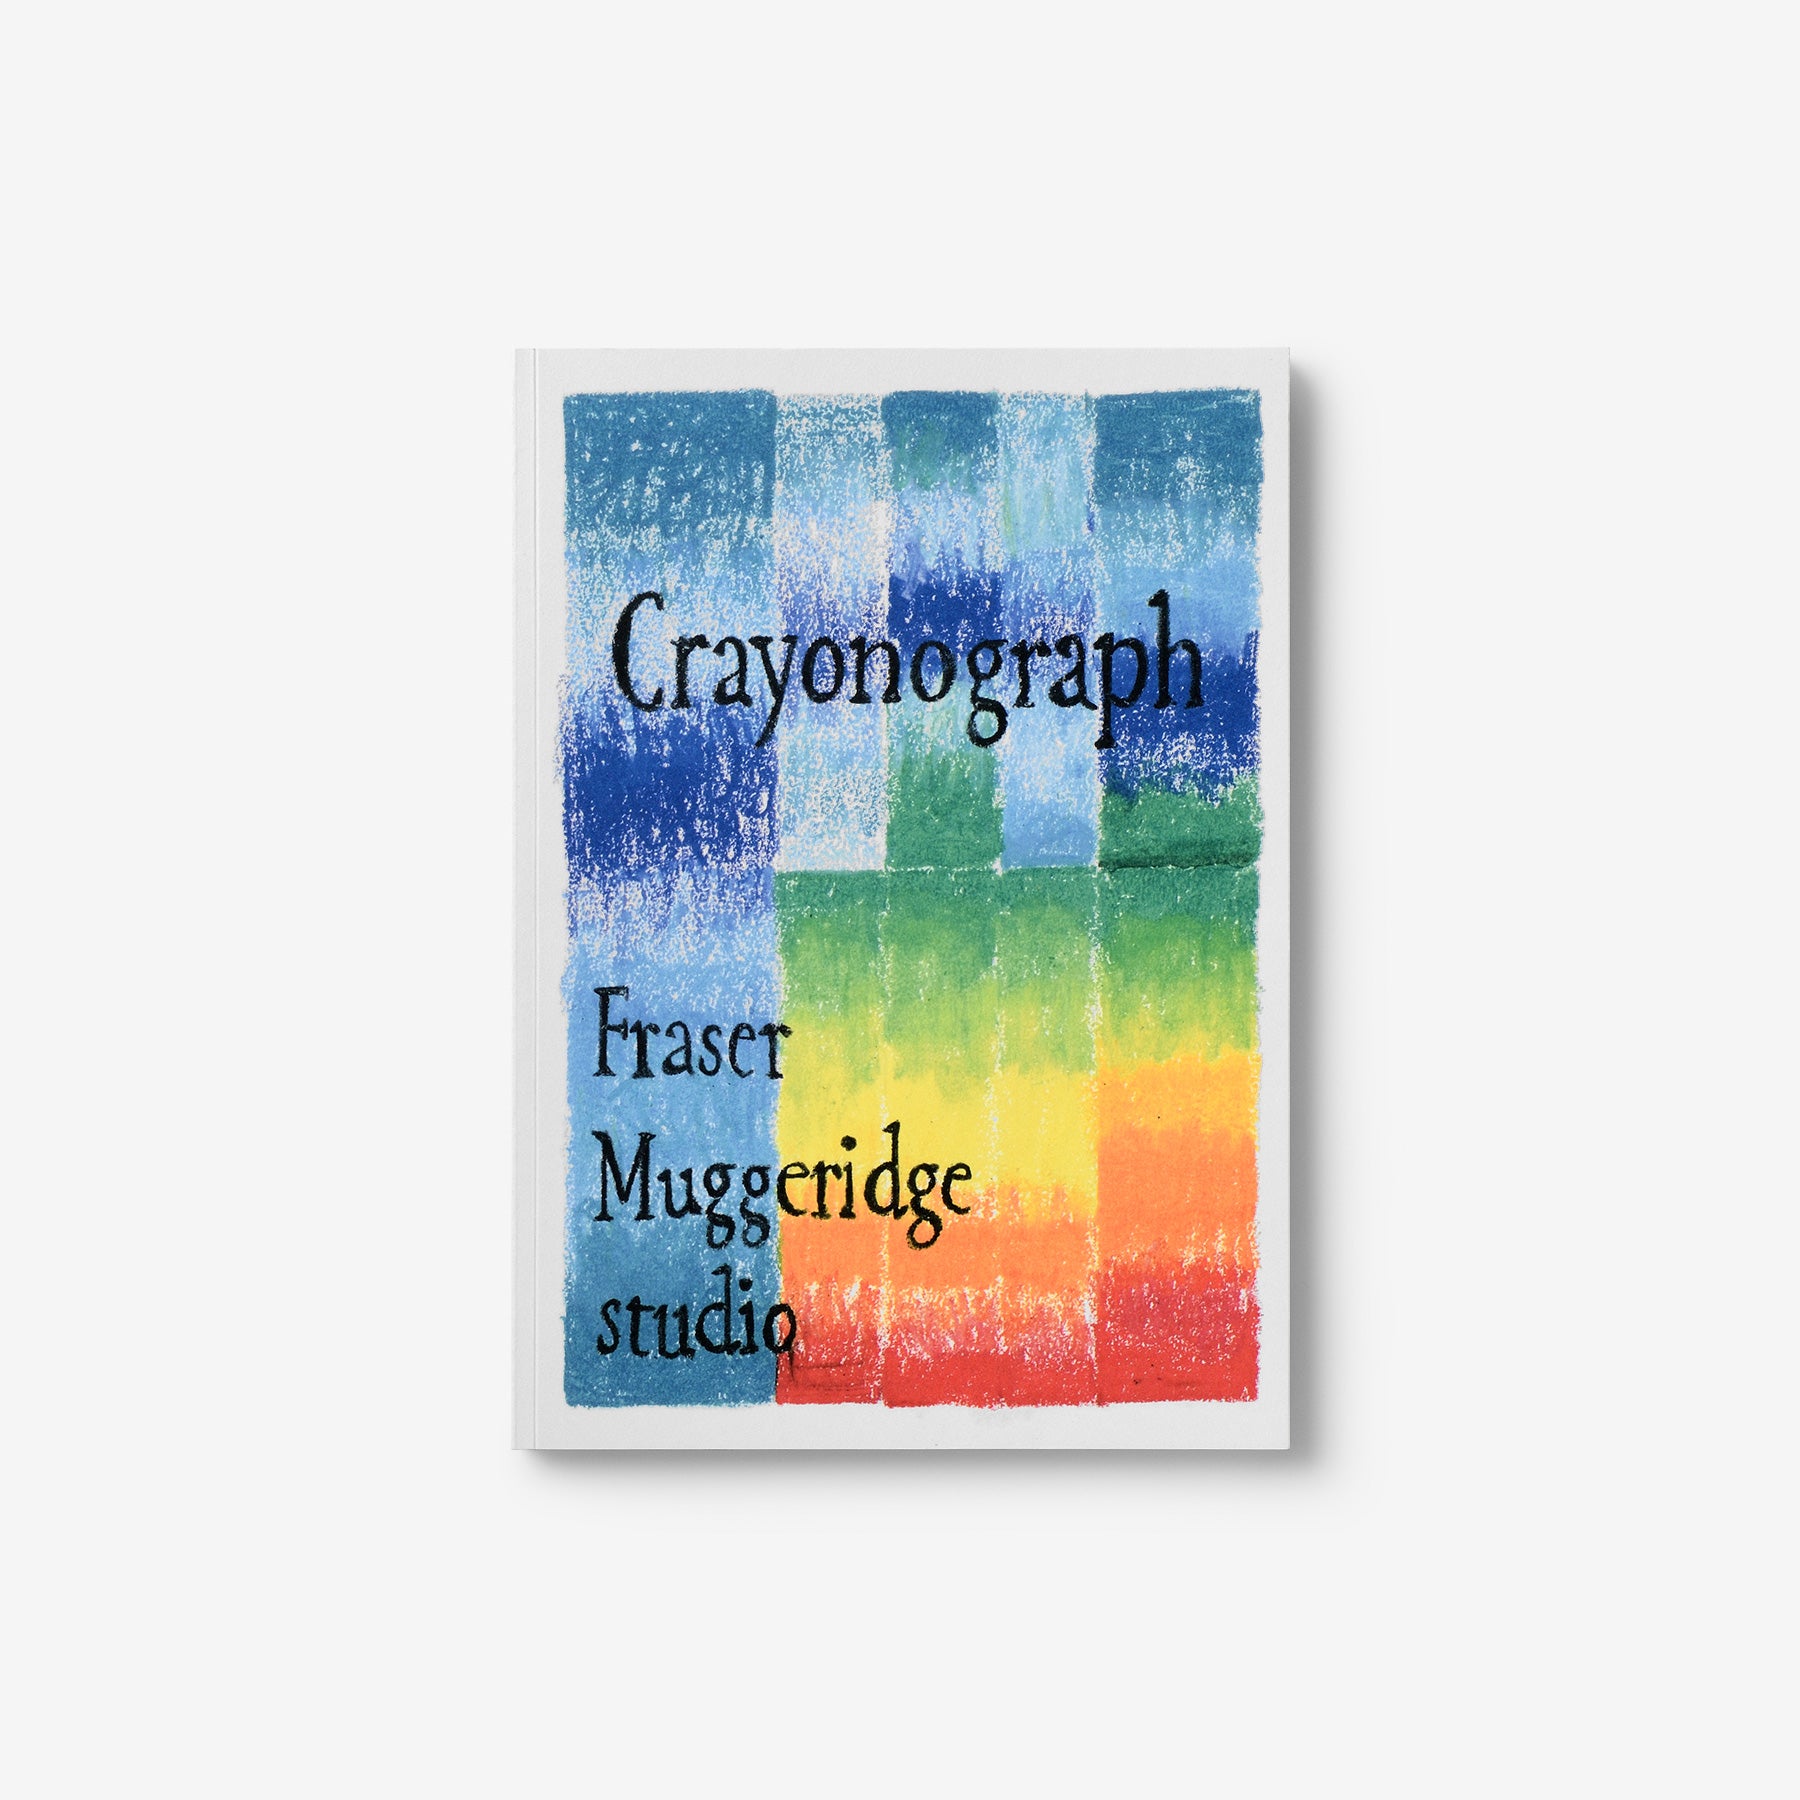 Fraser Muggeridge studio: Crayonograph